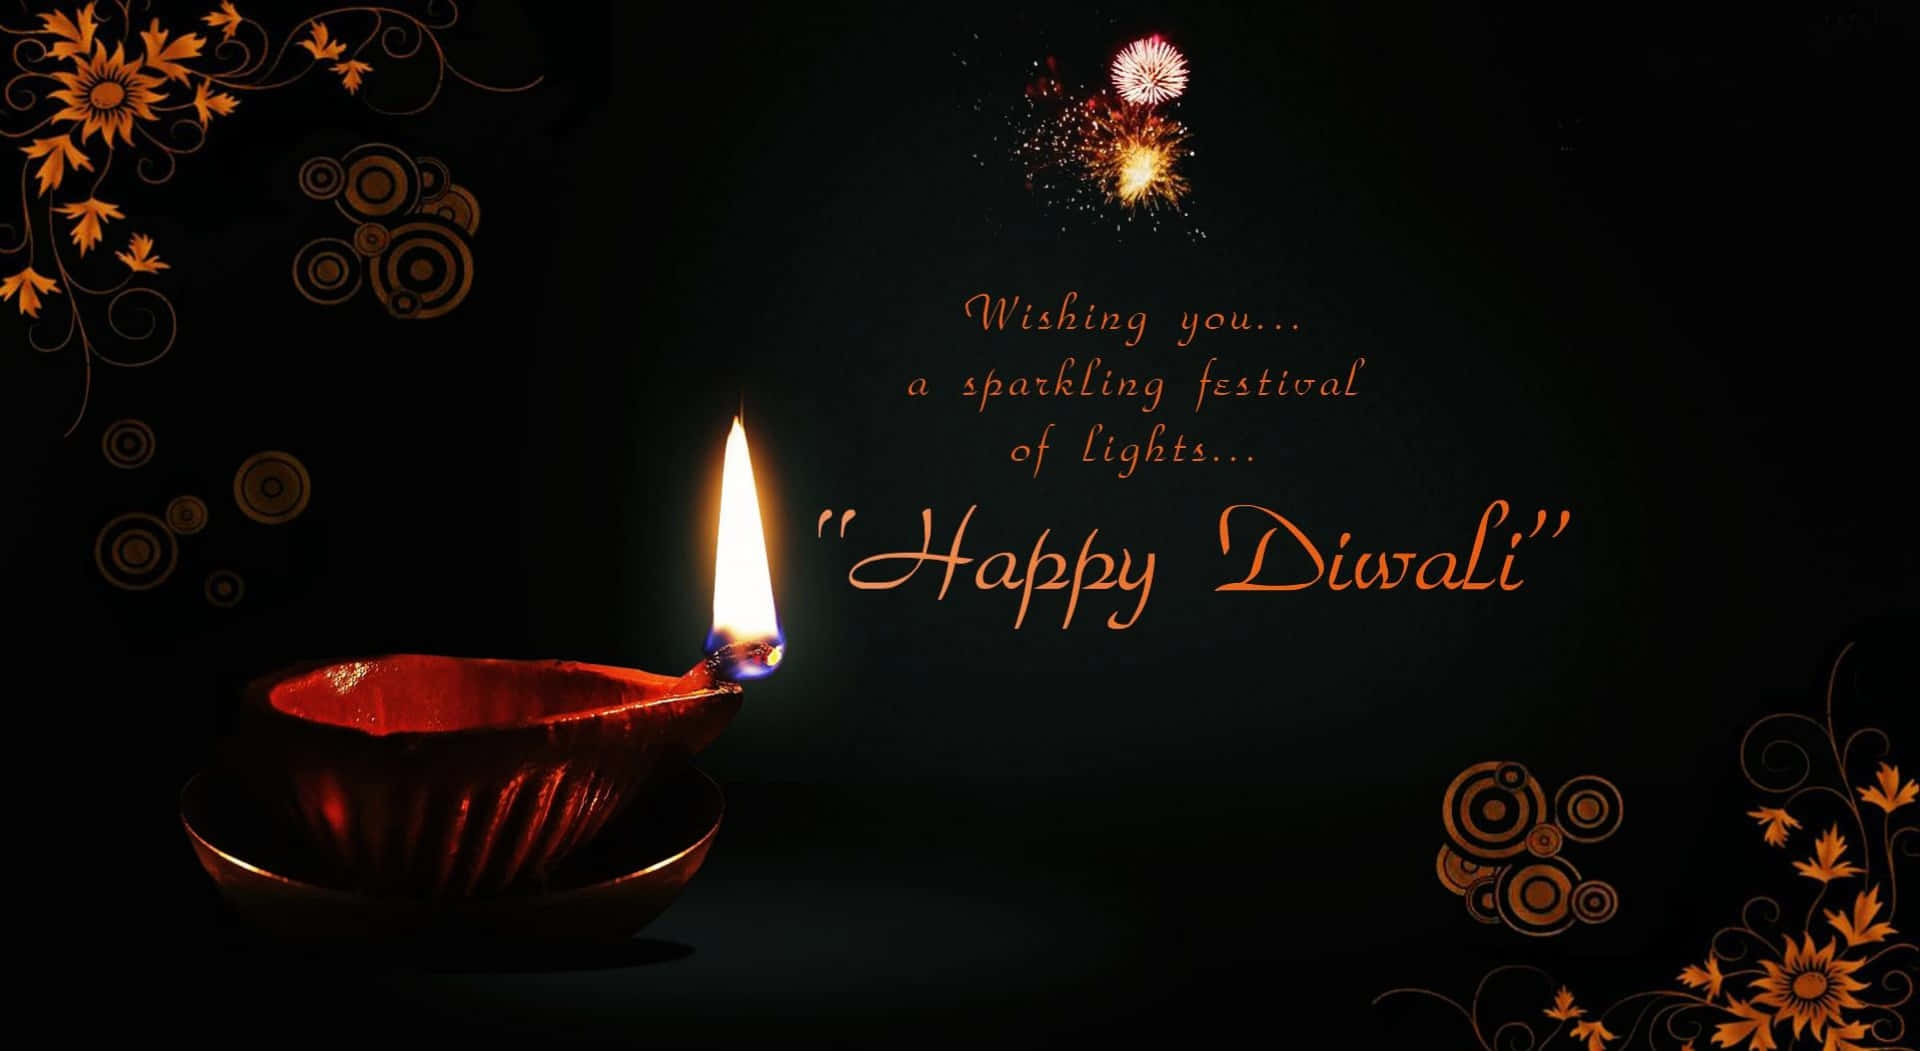 Dêas Boas-vindas Ao Espírito Do Diwali E Traga Felicidade E Prosperidade.